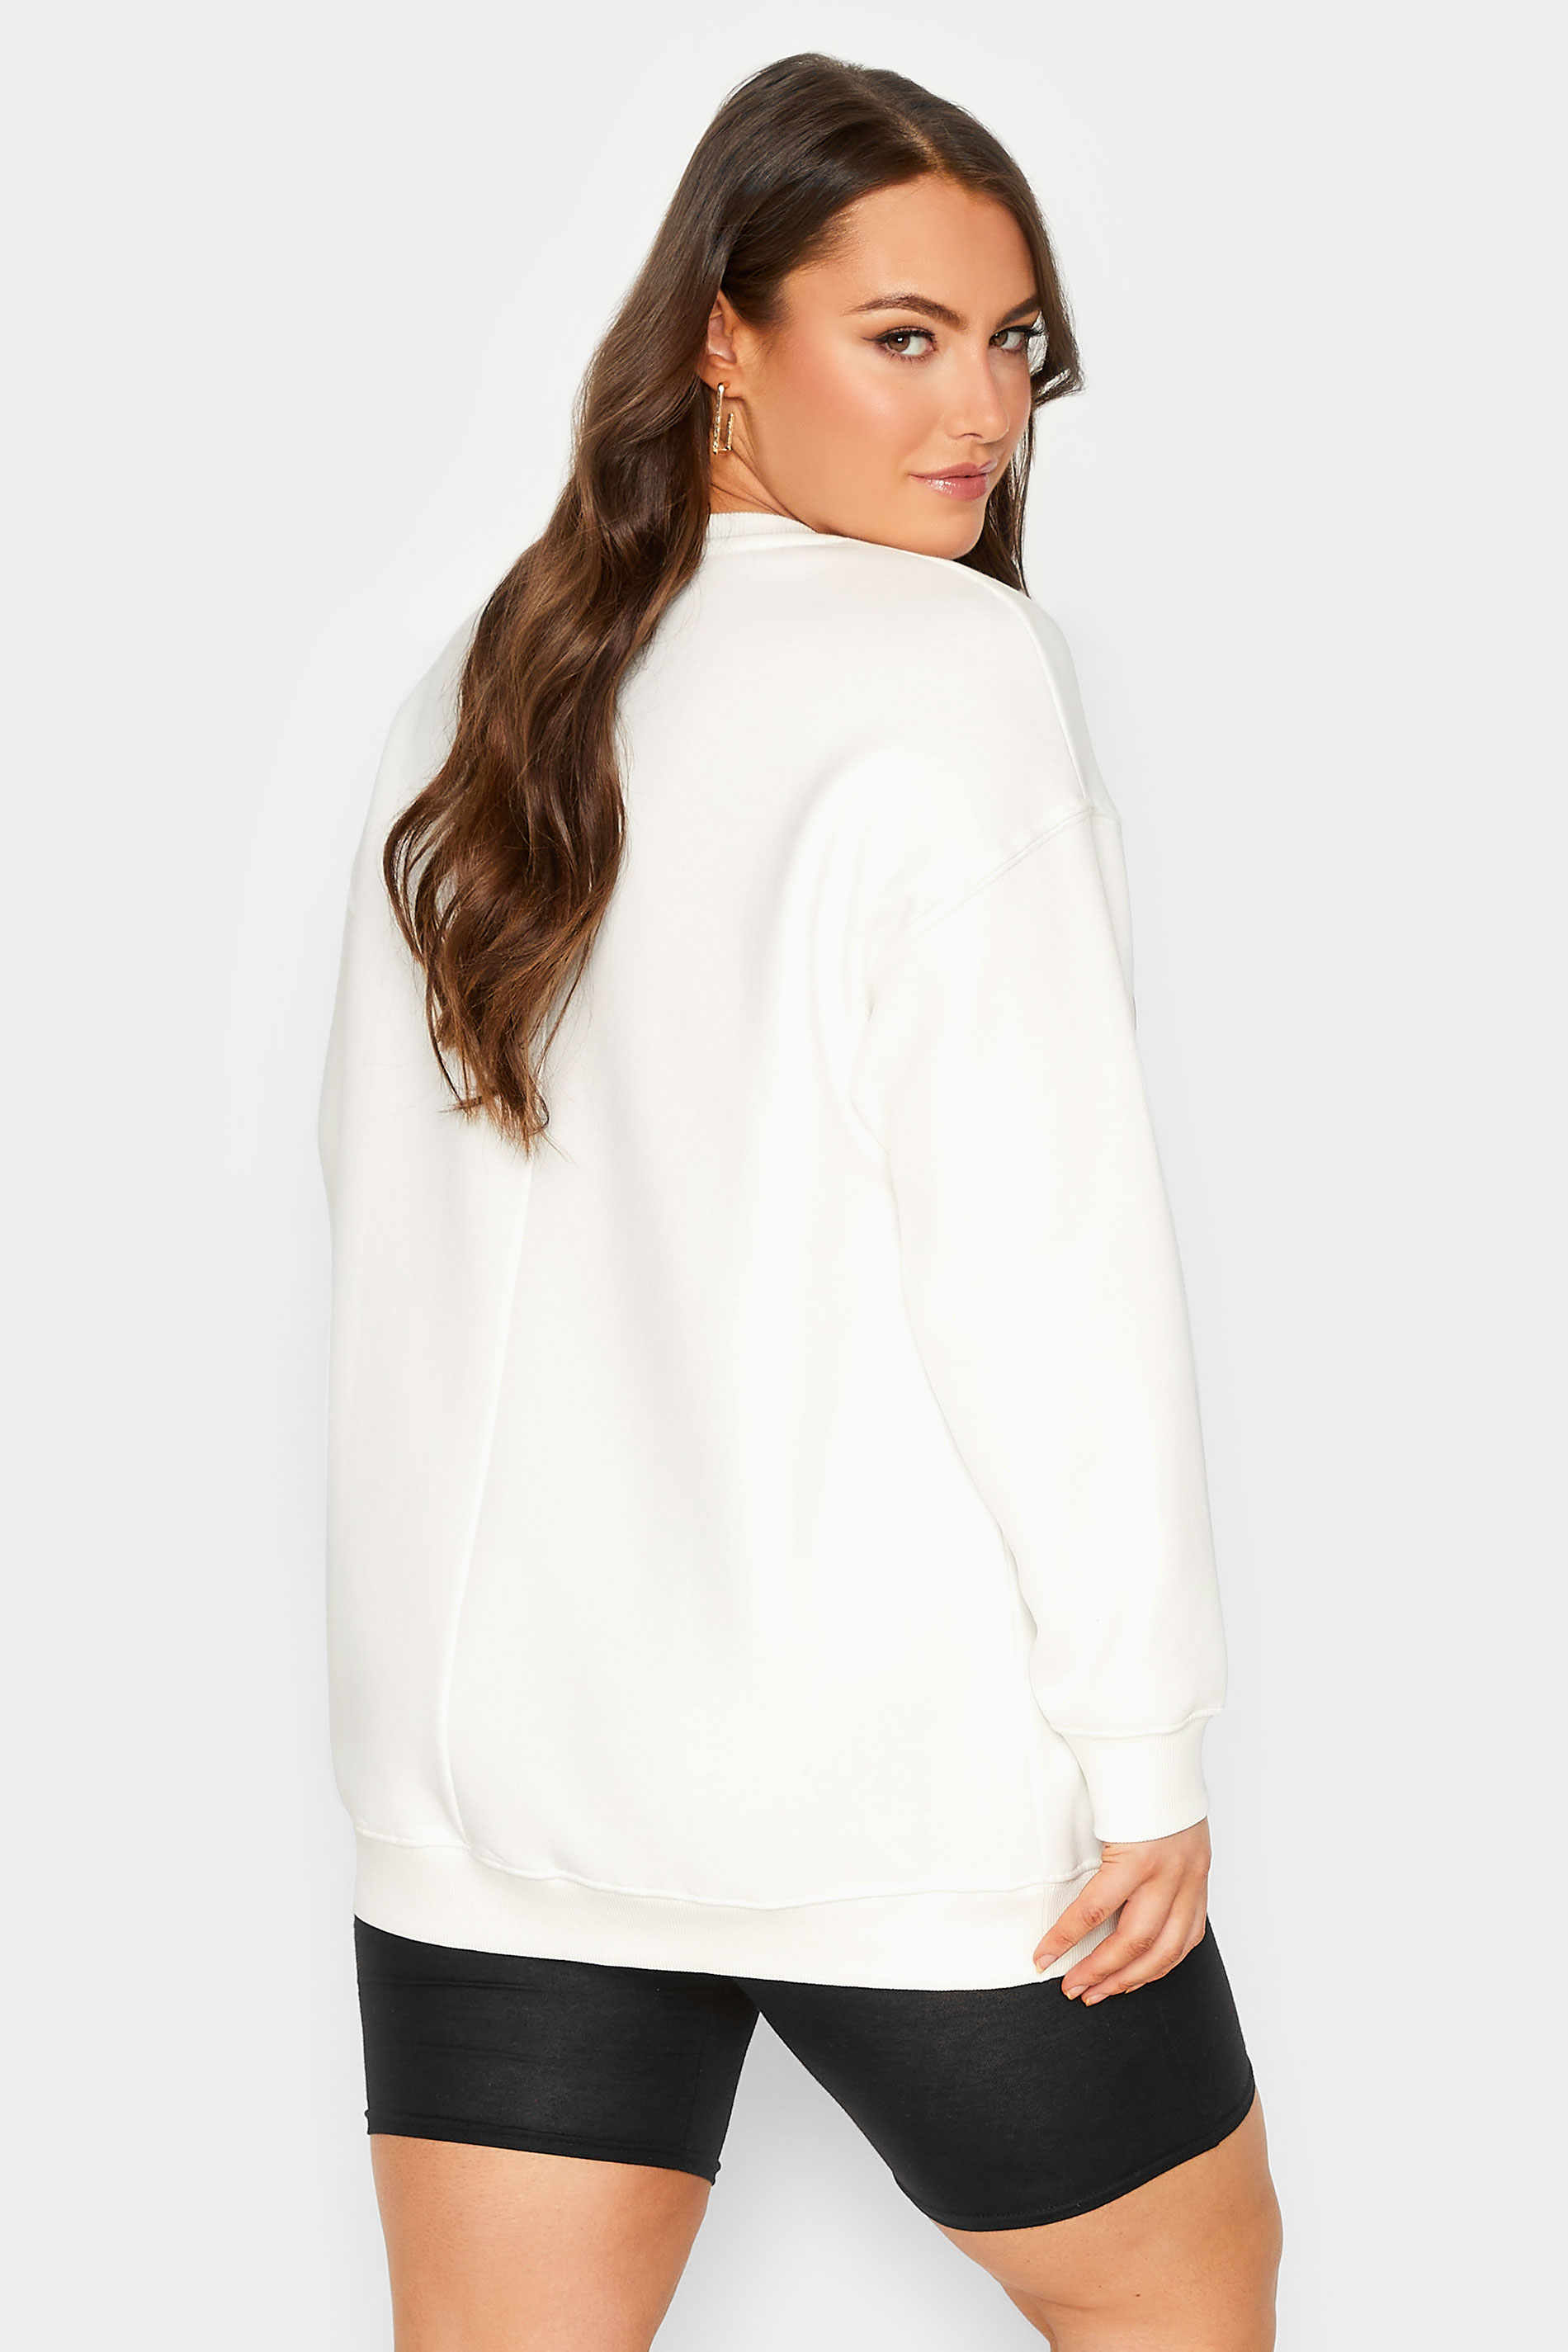 Plus Size Ivory White 'San Diego' Printed Slogan Sweatshirt | Yours Clothing 3